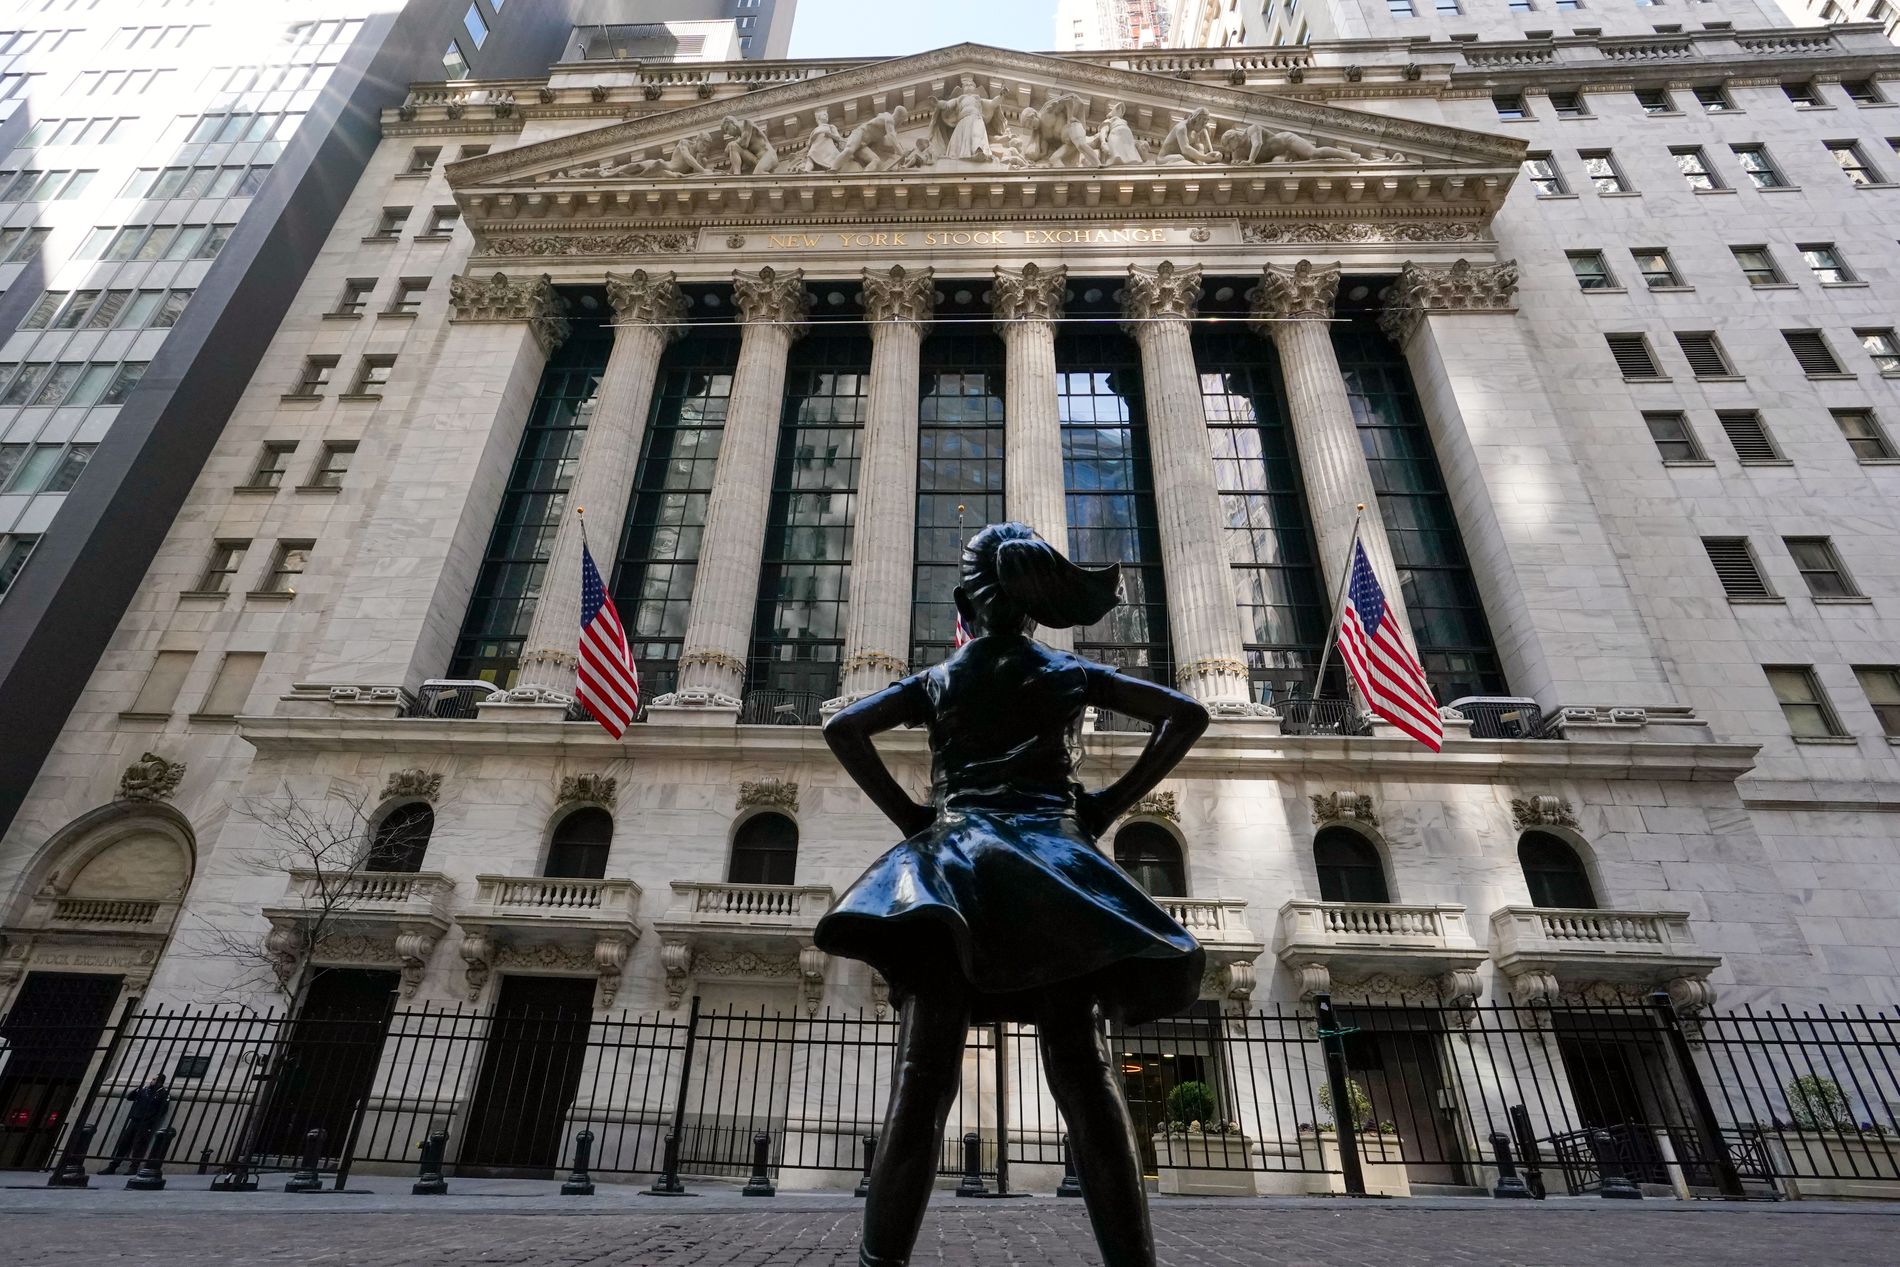 Loss week on Wall Street despite Friday's rally - E24